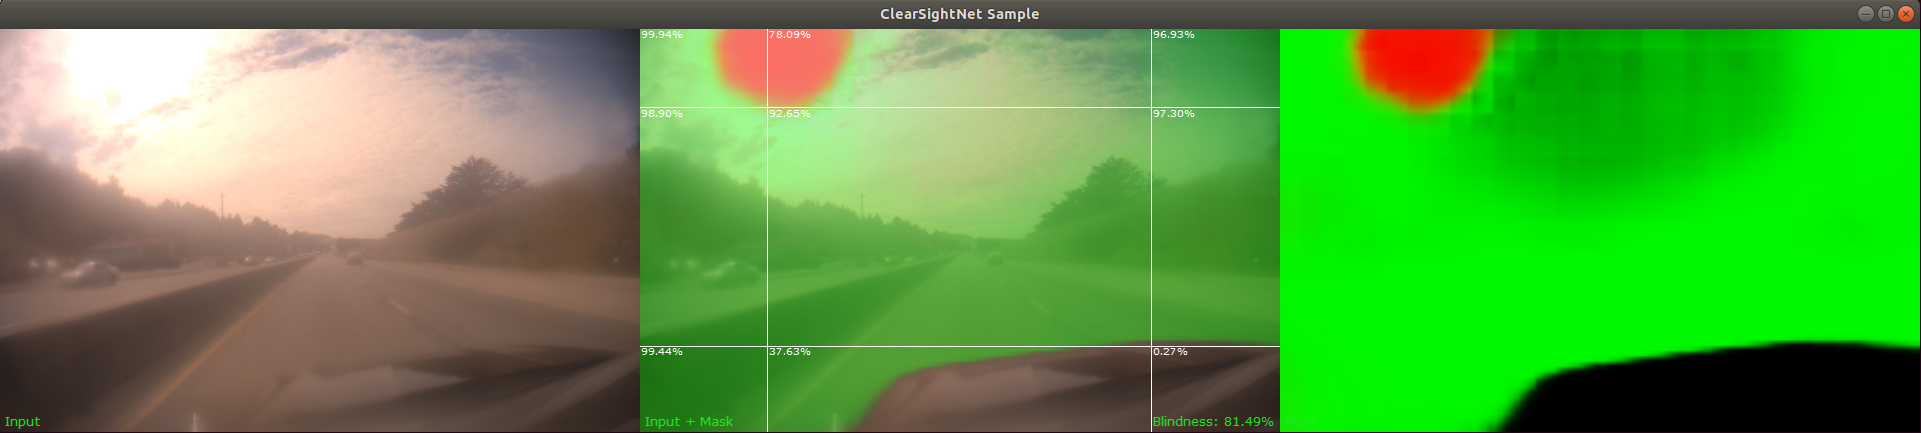 sample_clearsightnet_detection.png